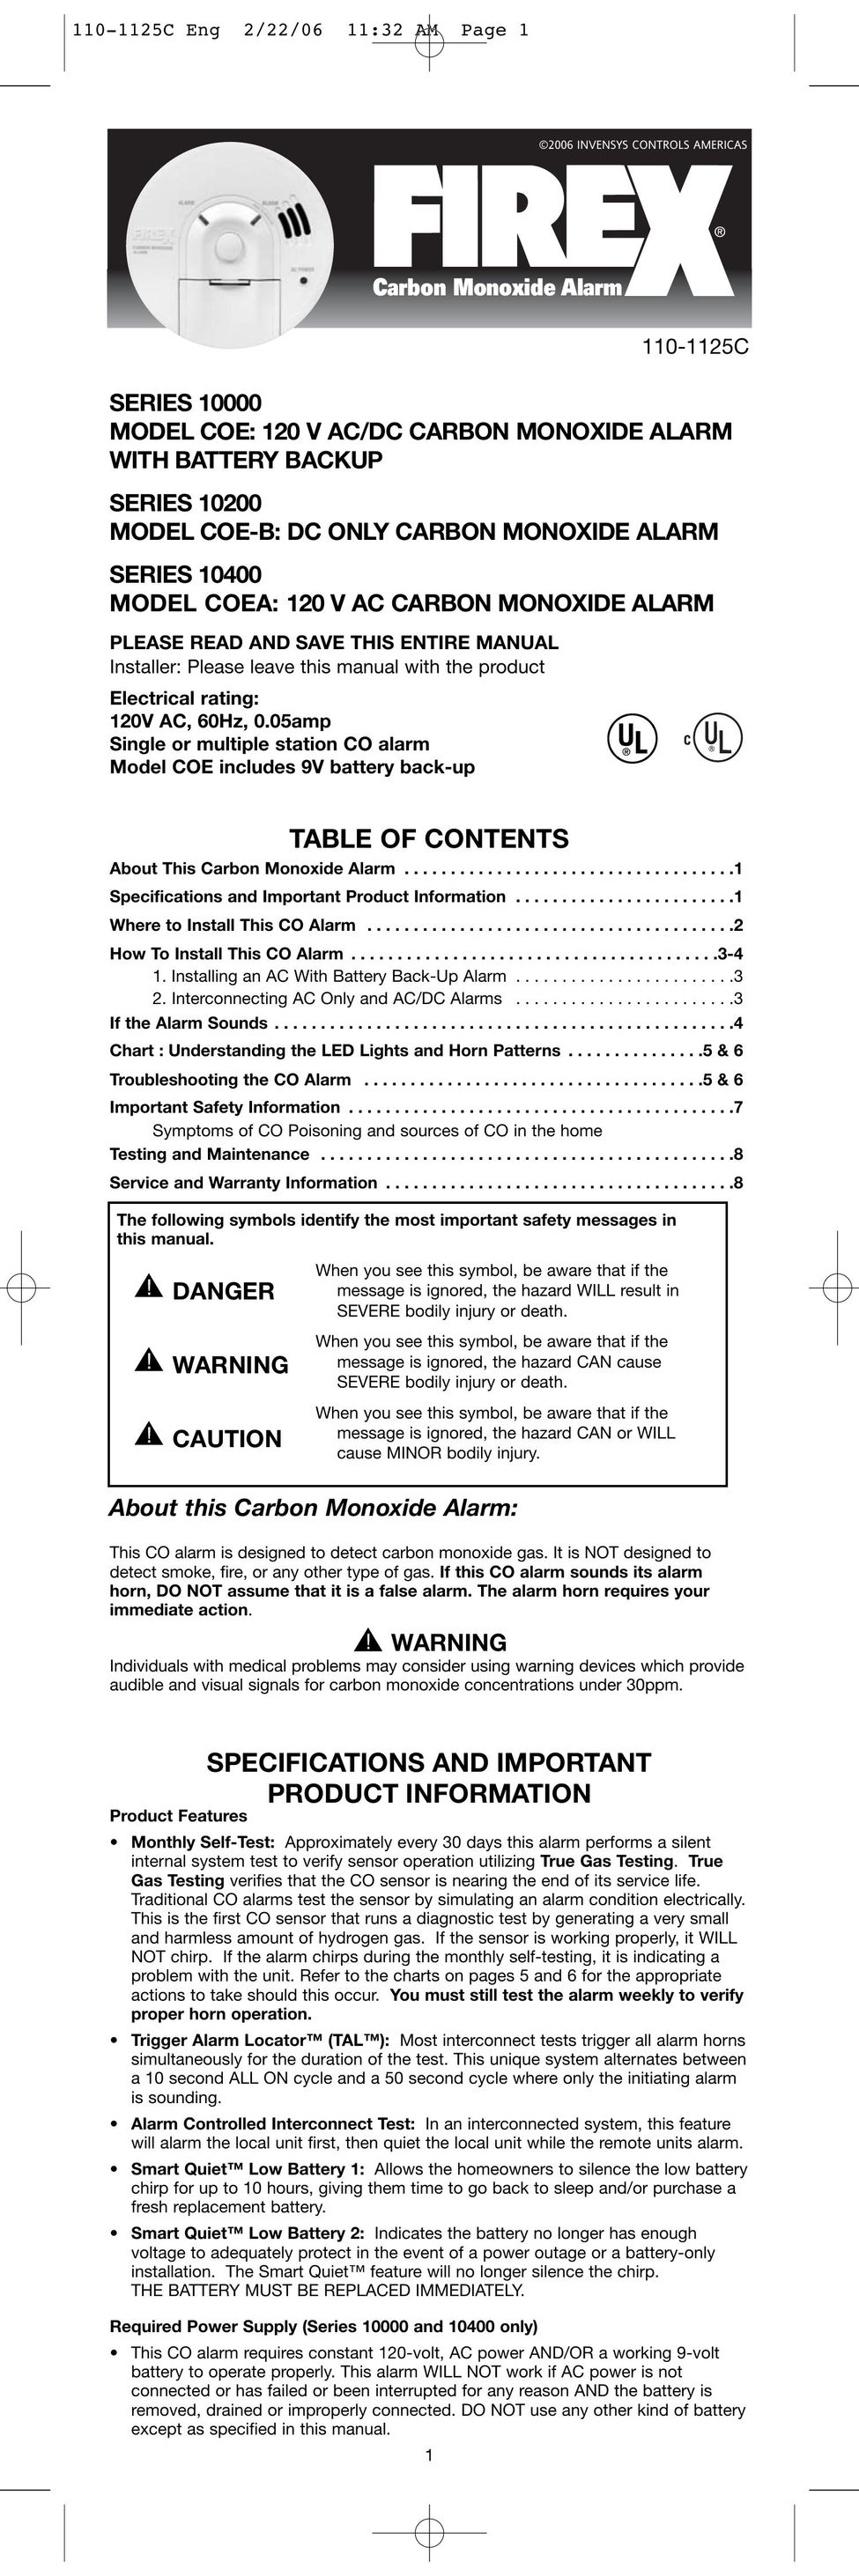 Firex SERIES 10000 Carbon Monoxide Alarm User Manual